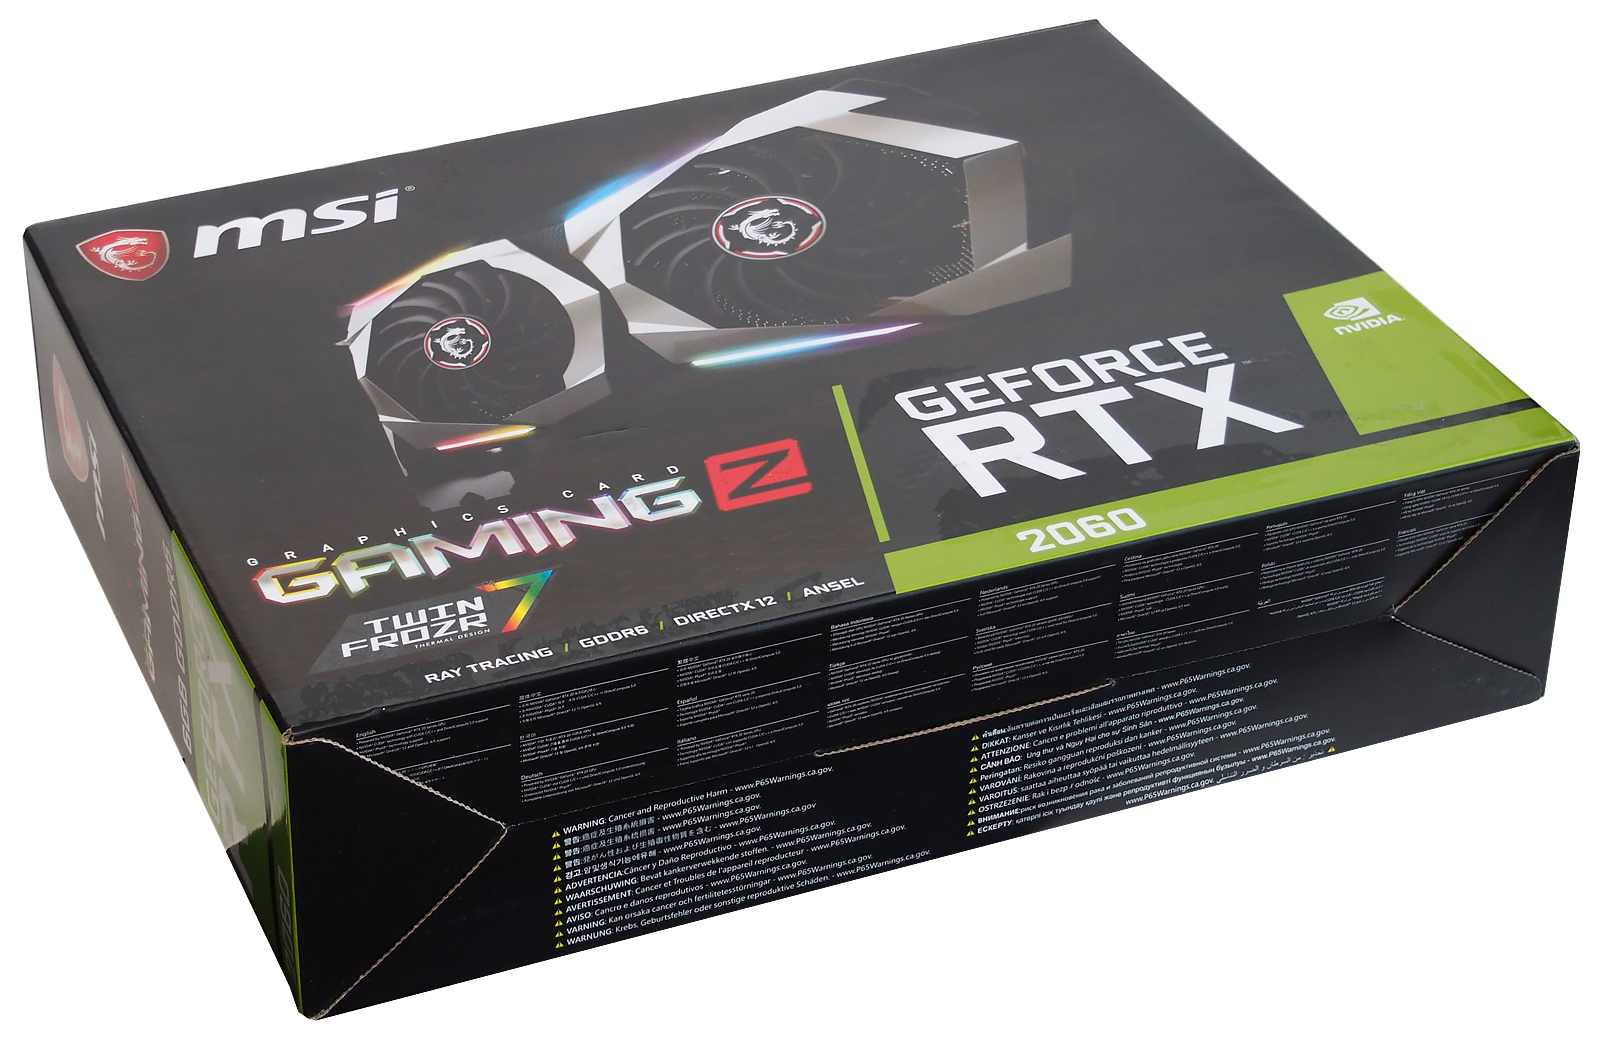 GEFORCE RTX 2060 Gaming z 6g. RTX 2060 MSI Gaming z. Коробка от MSI RTX 2060. Видеокарта РТХ 2060 МСИ упаковка. Geforce rtx 2060 gaming pro